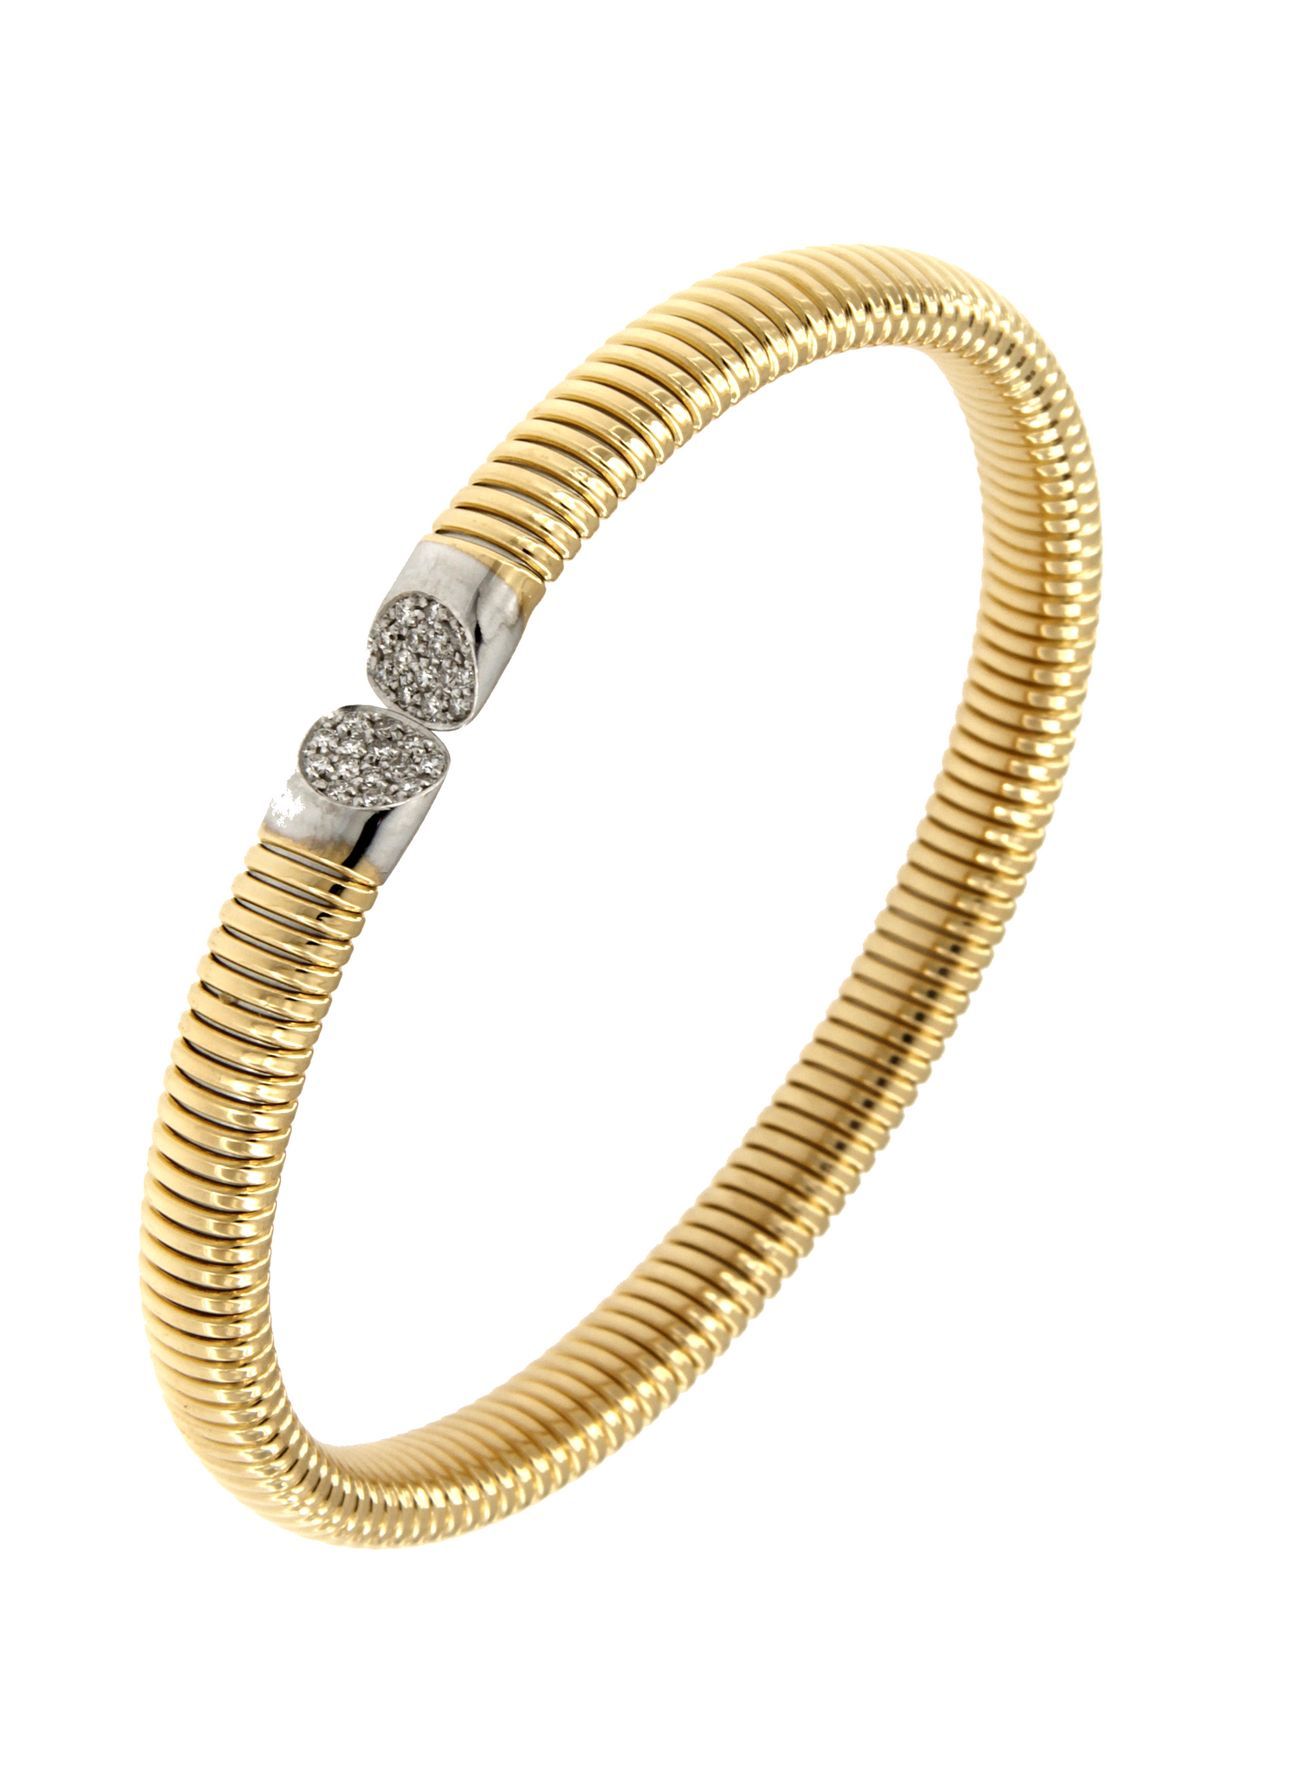 Gold and diamond bracelet GAS TUBE ART.5779